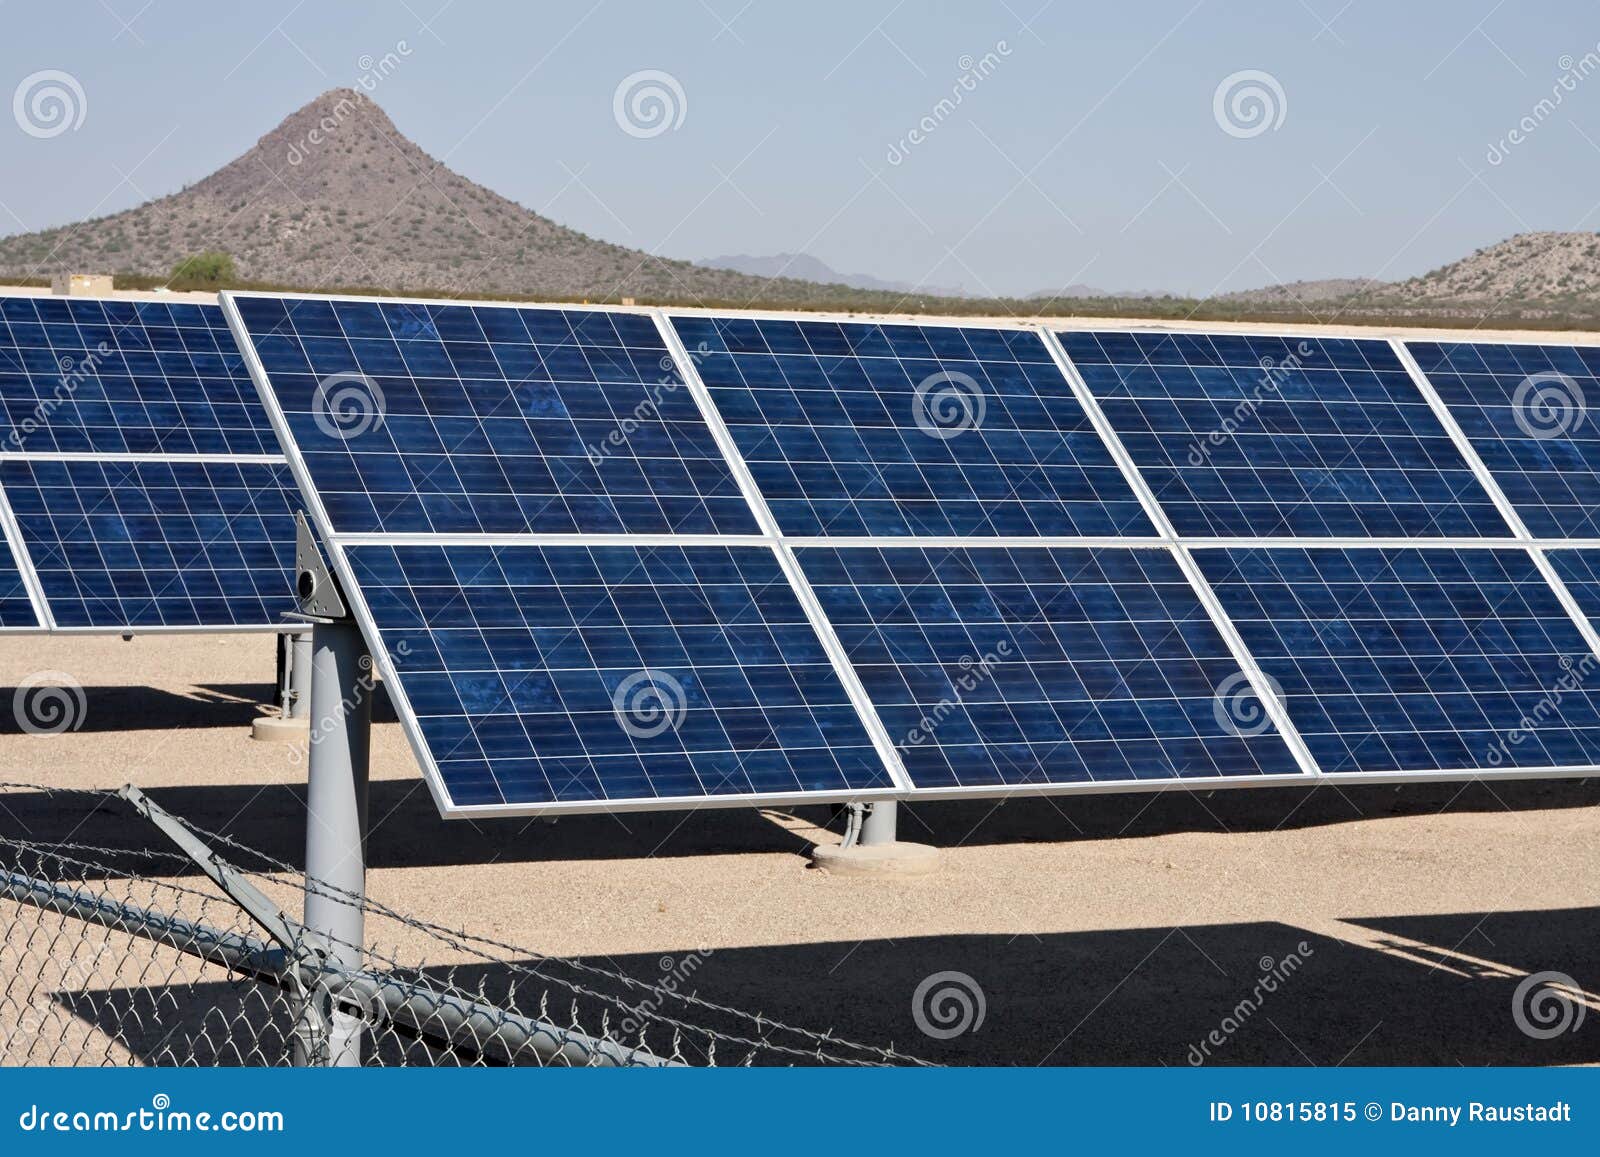 solar panel energy collector farm